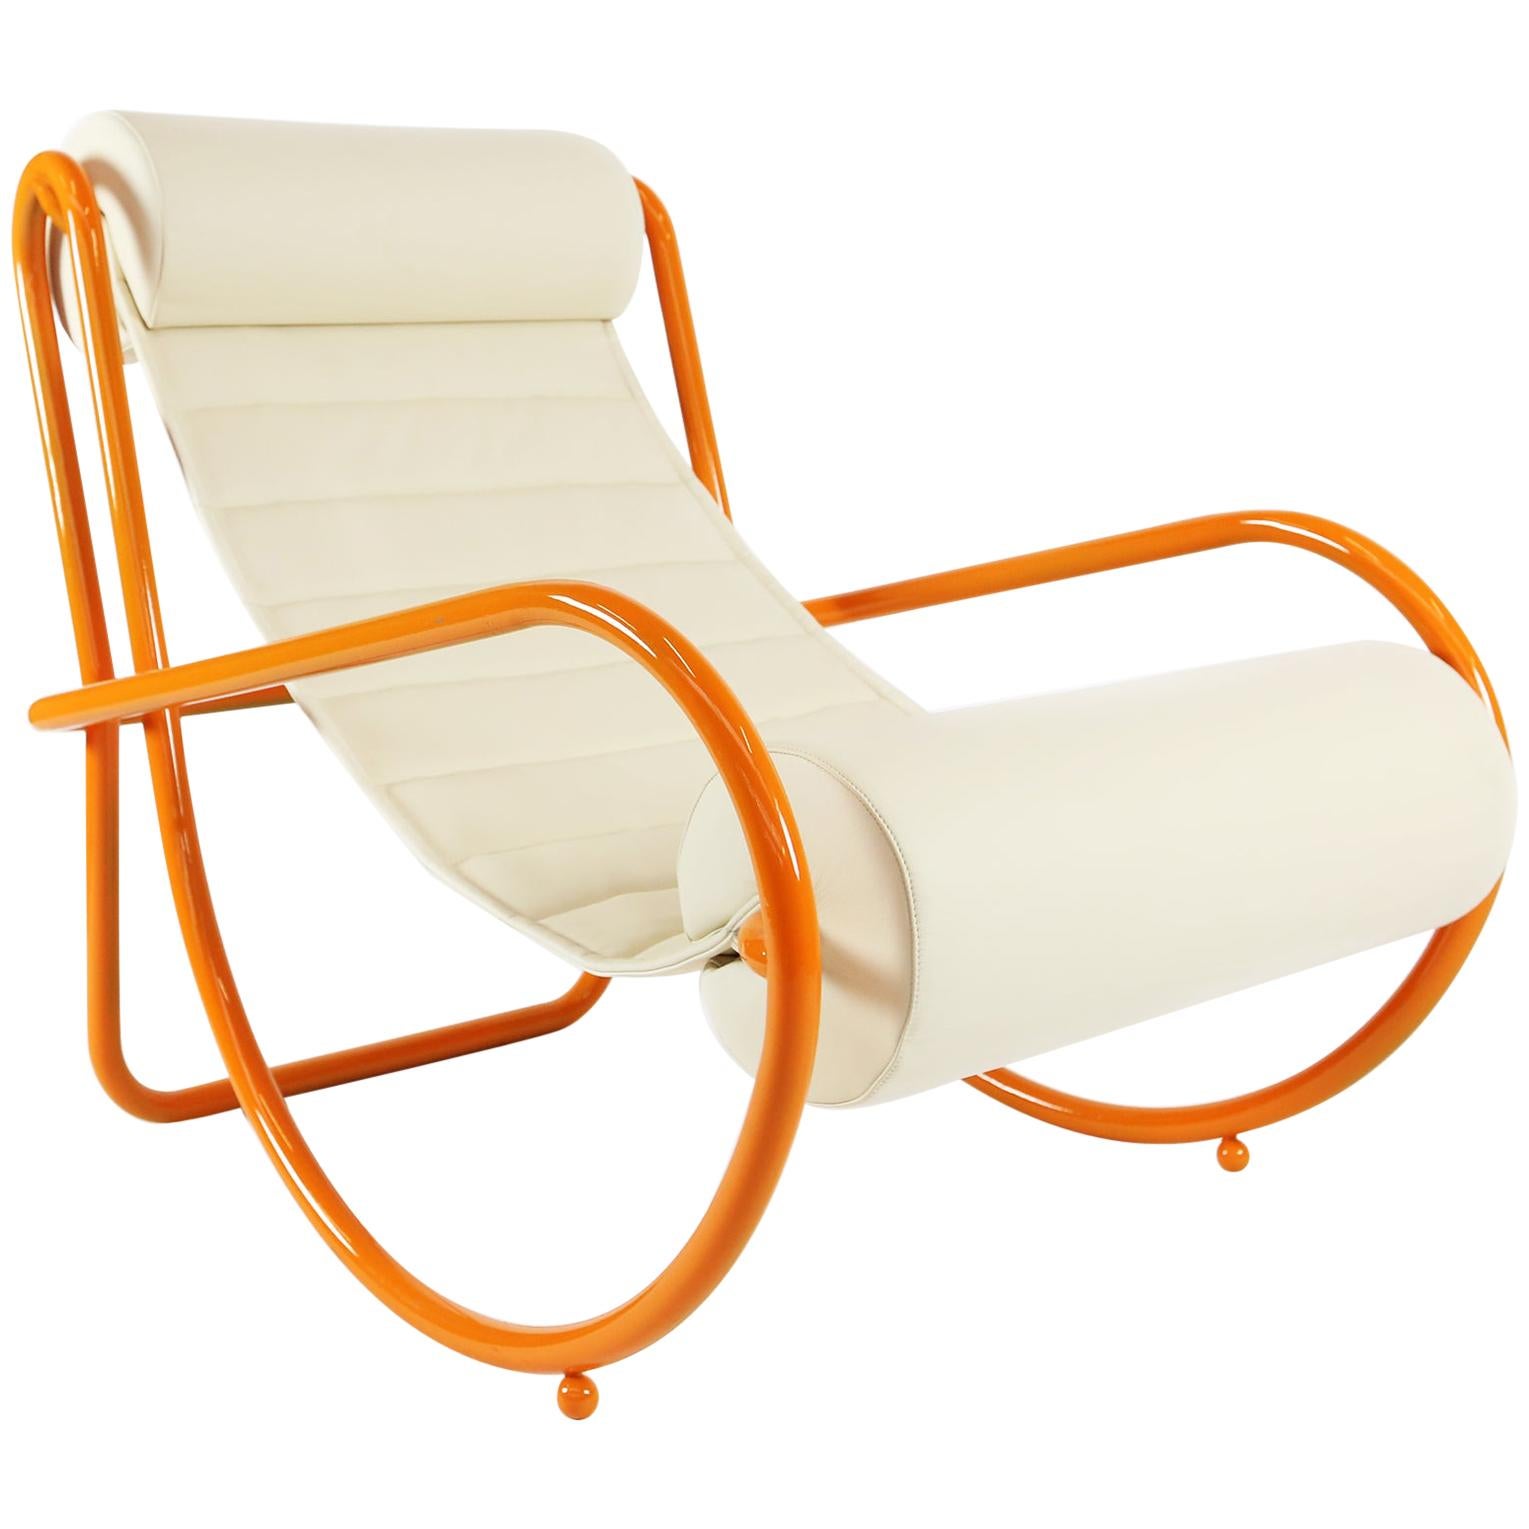 Gae Aulenti Locus Solus Lounge Chair in Orange Colored Metal and Leather